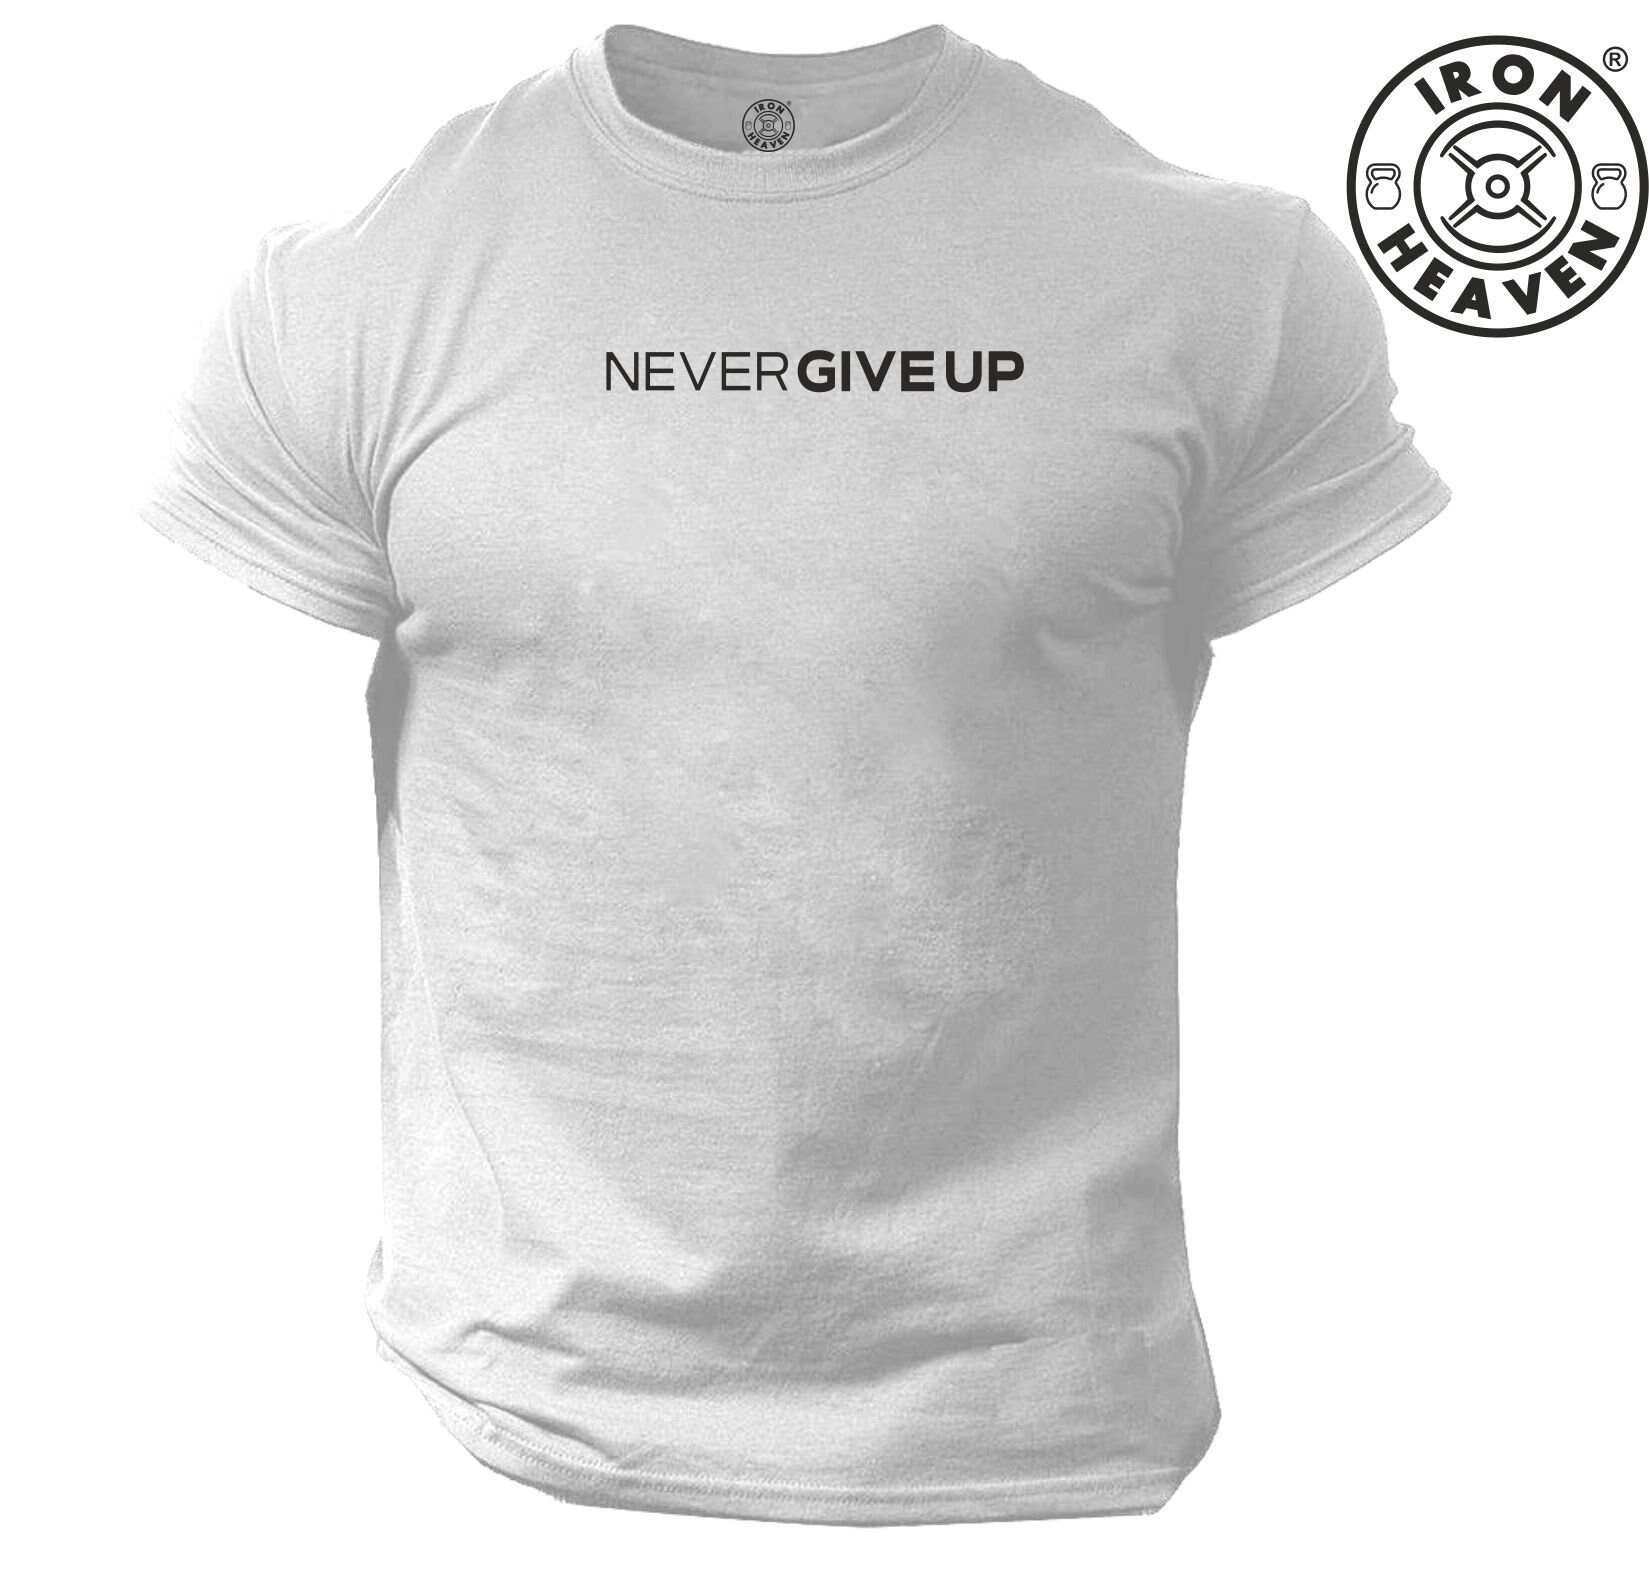 Never Give Up T-Shirt Gym Kleidung Bodybuilding Training Workout Übung Fitness Gewichtheben Boxen Karate Iron Heaven Mma Männer T Top von TheGymMonsterTGM